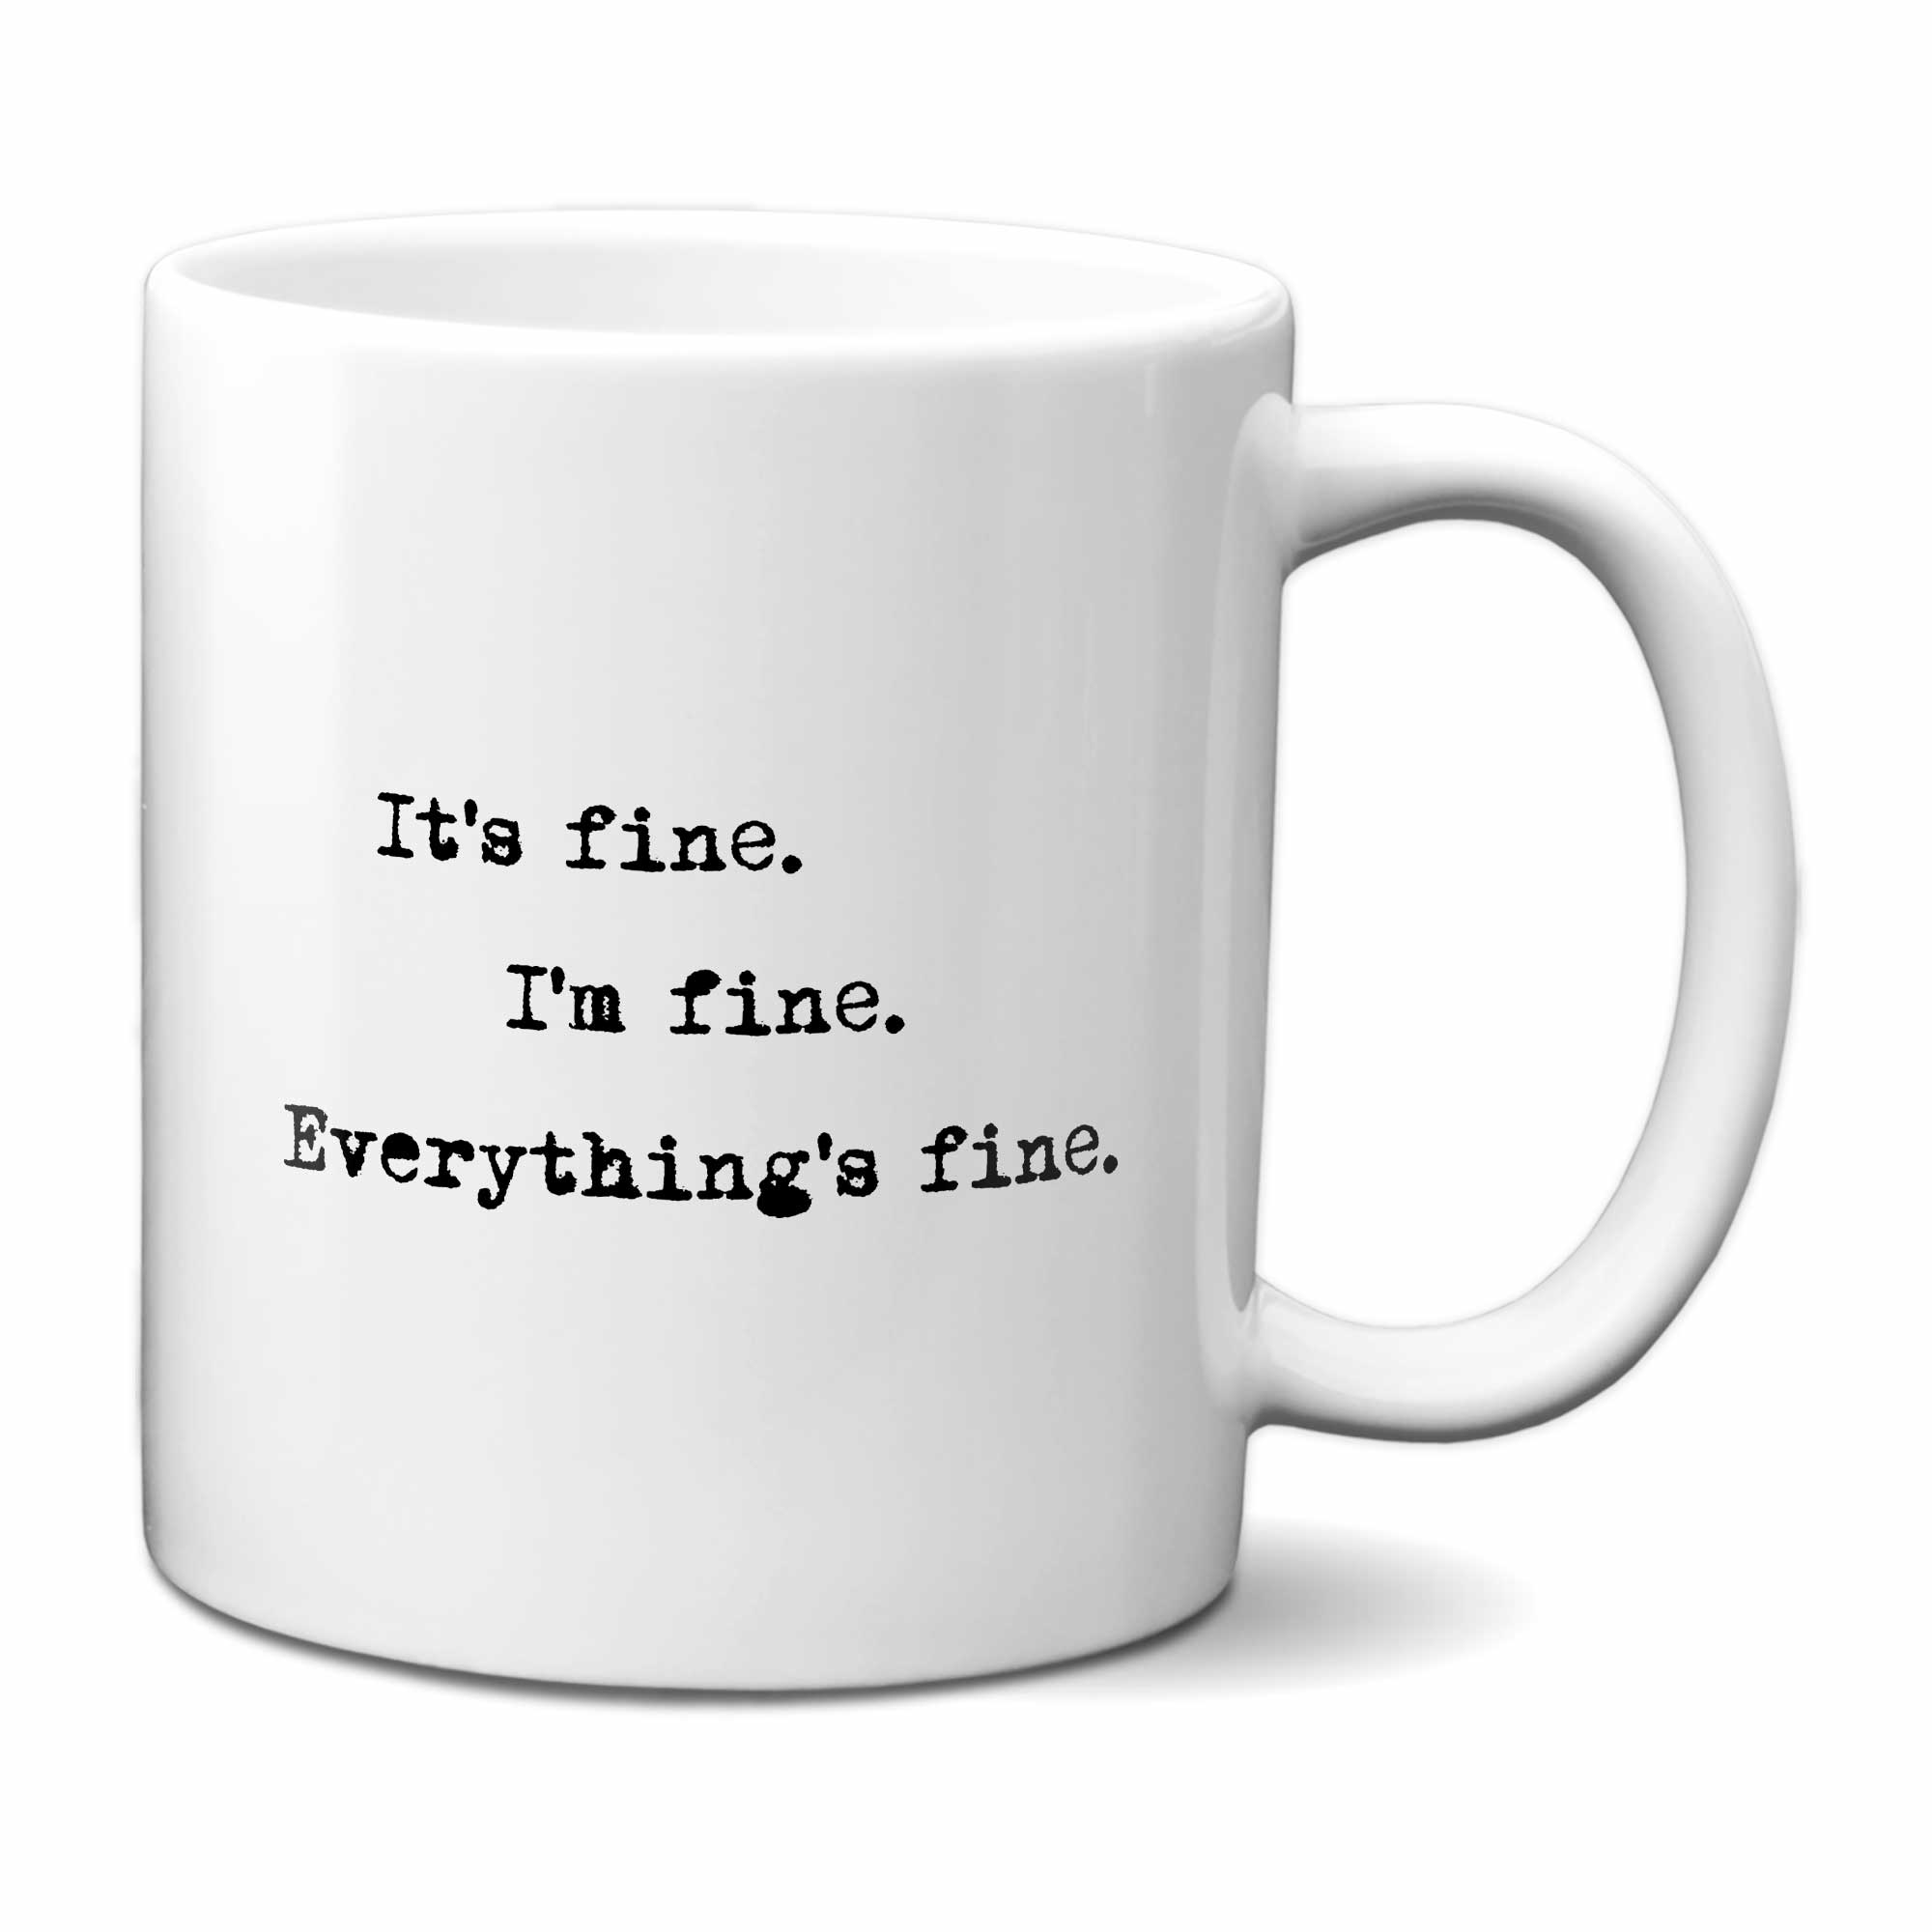 It's fine. I'm fine. Everything's fine. Mug